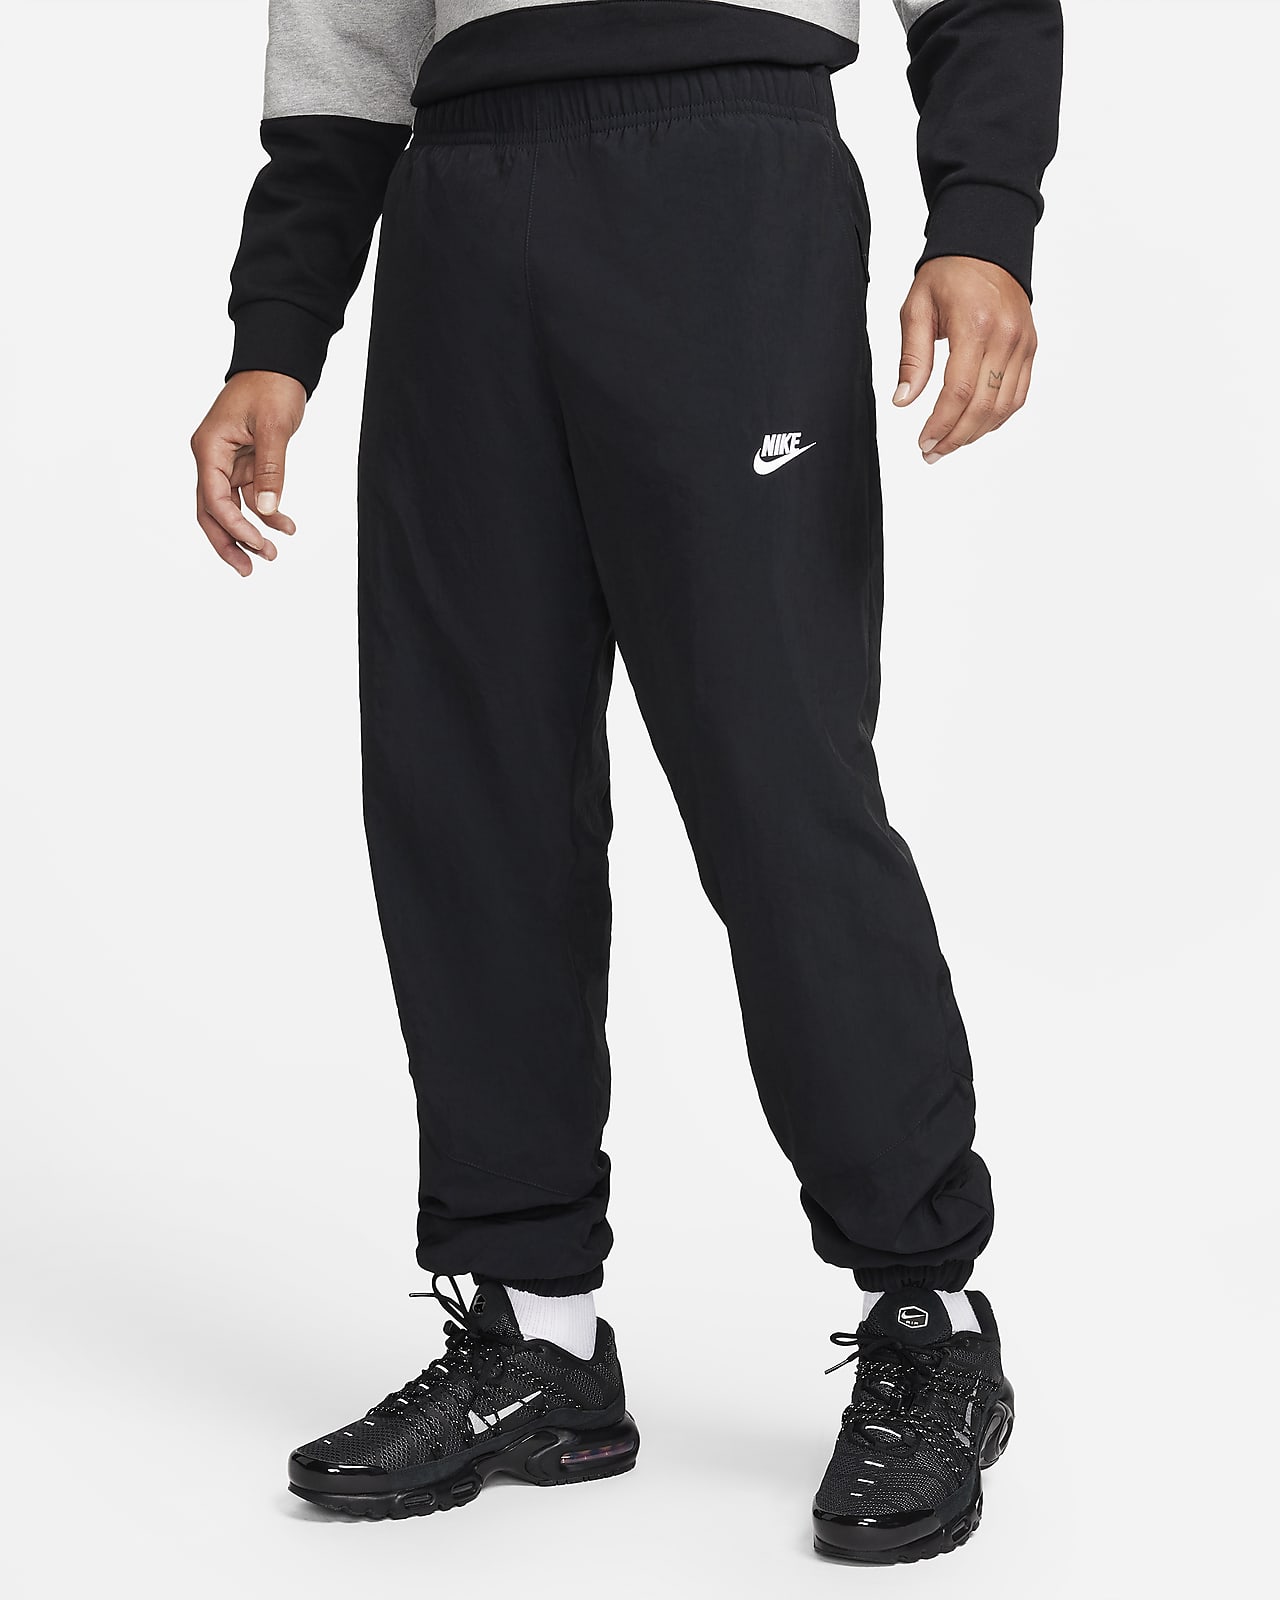 Pantalon d‘hiver tissé Nike Windrunner pour homme